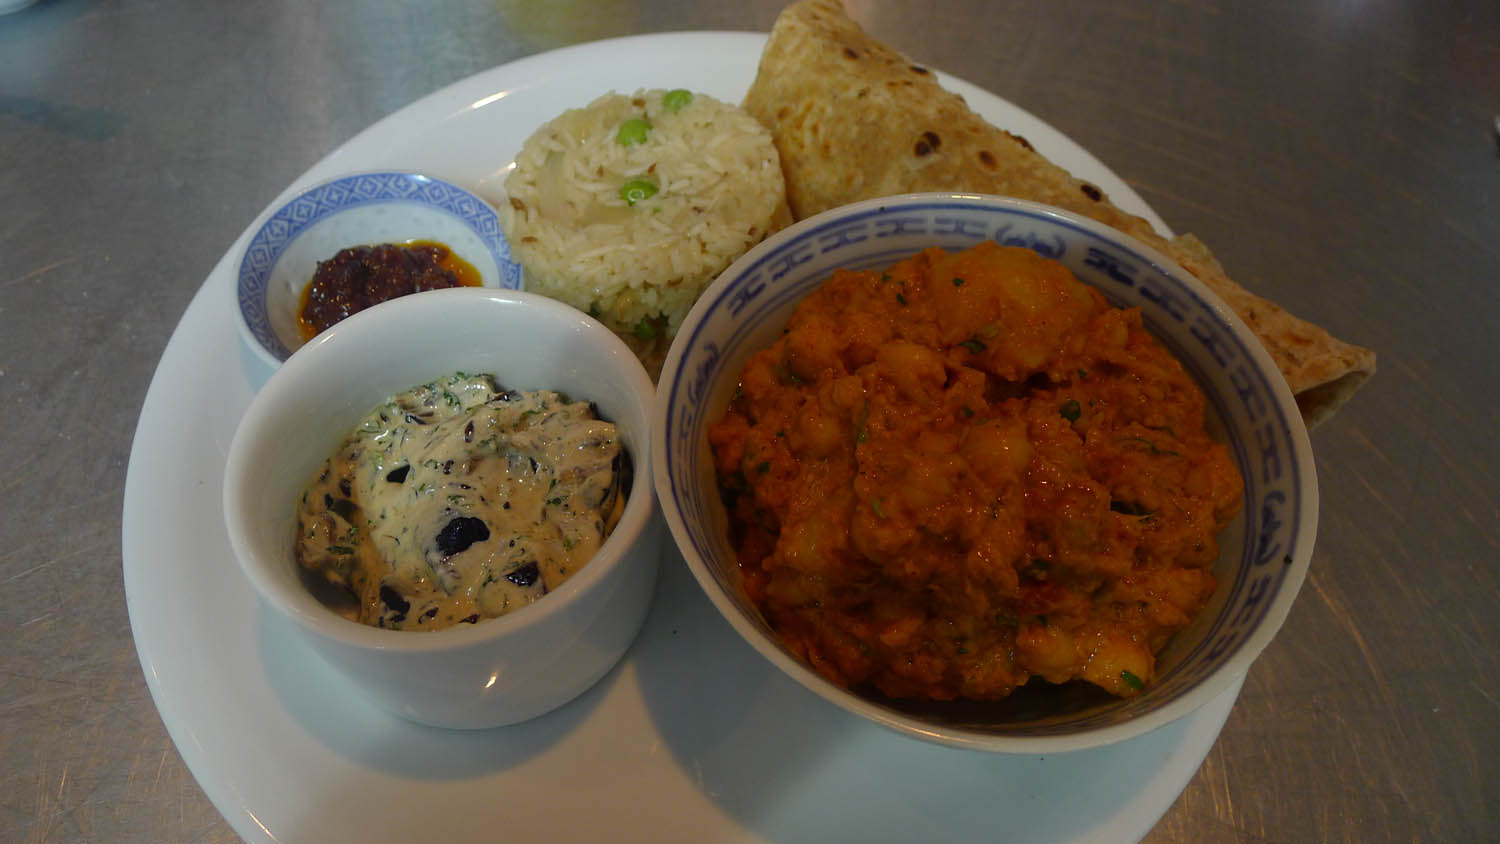 Our Thali, clockwise from top left: chilli jam; caramelised onion and peas pulao; chapatti; channa masala; aubergine raita